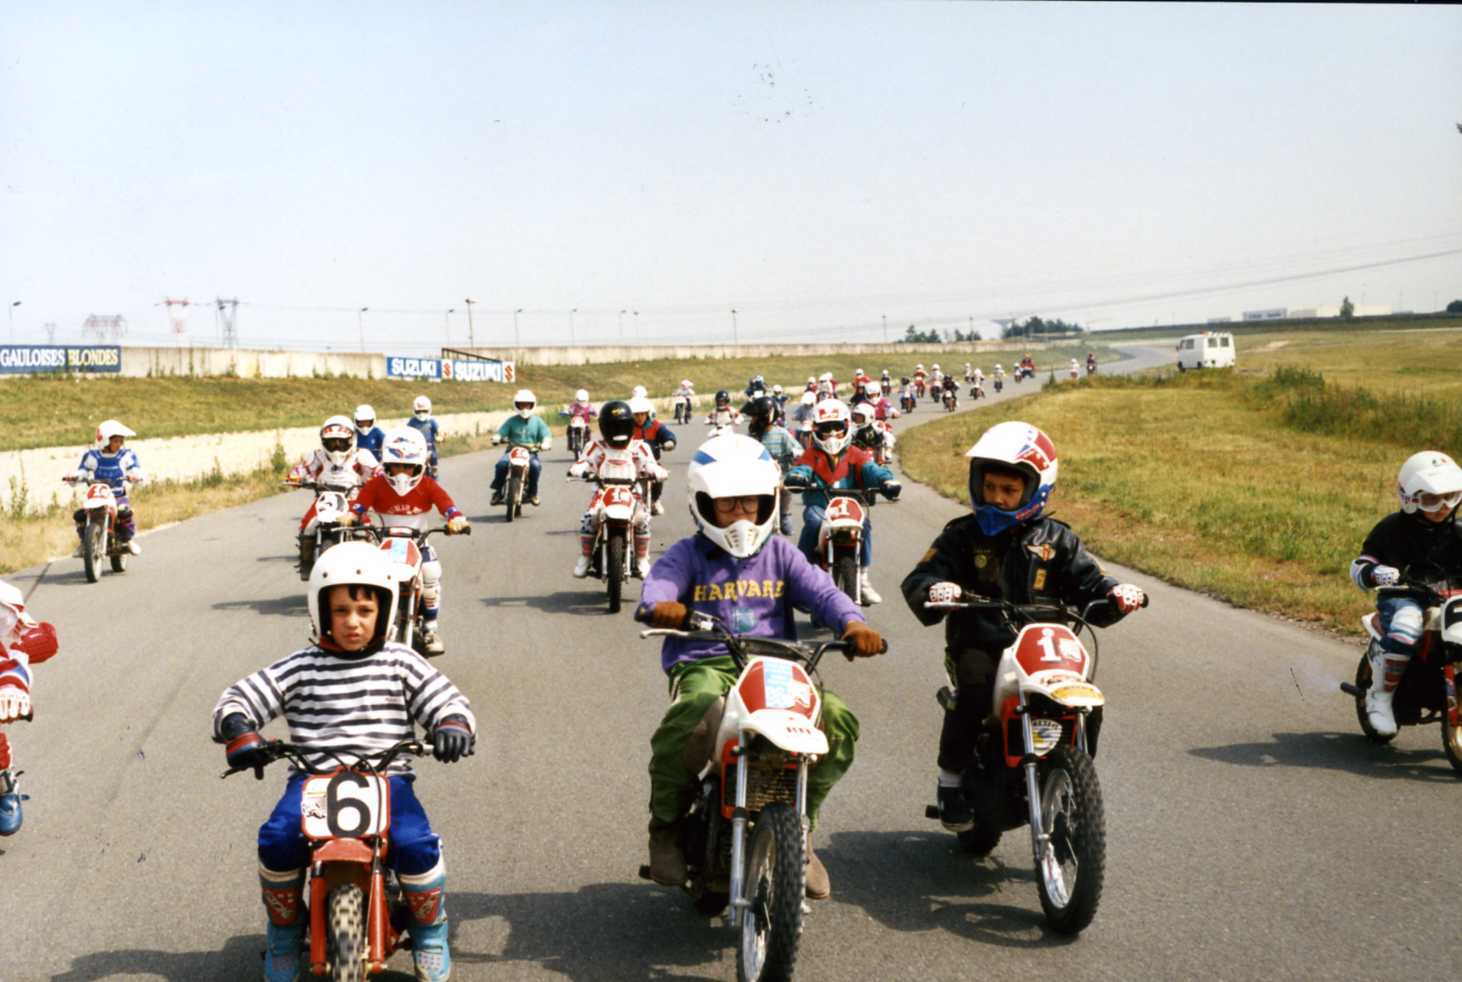 Circuit Carole Années 2000